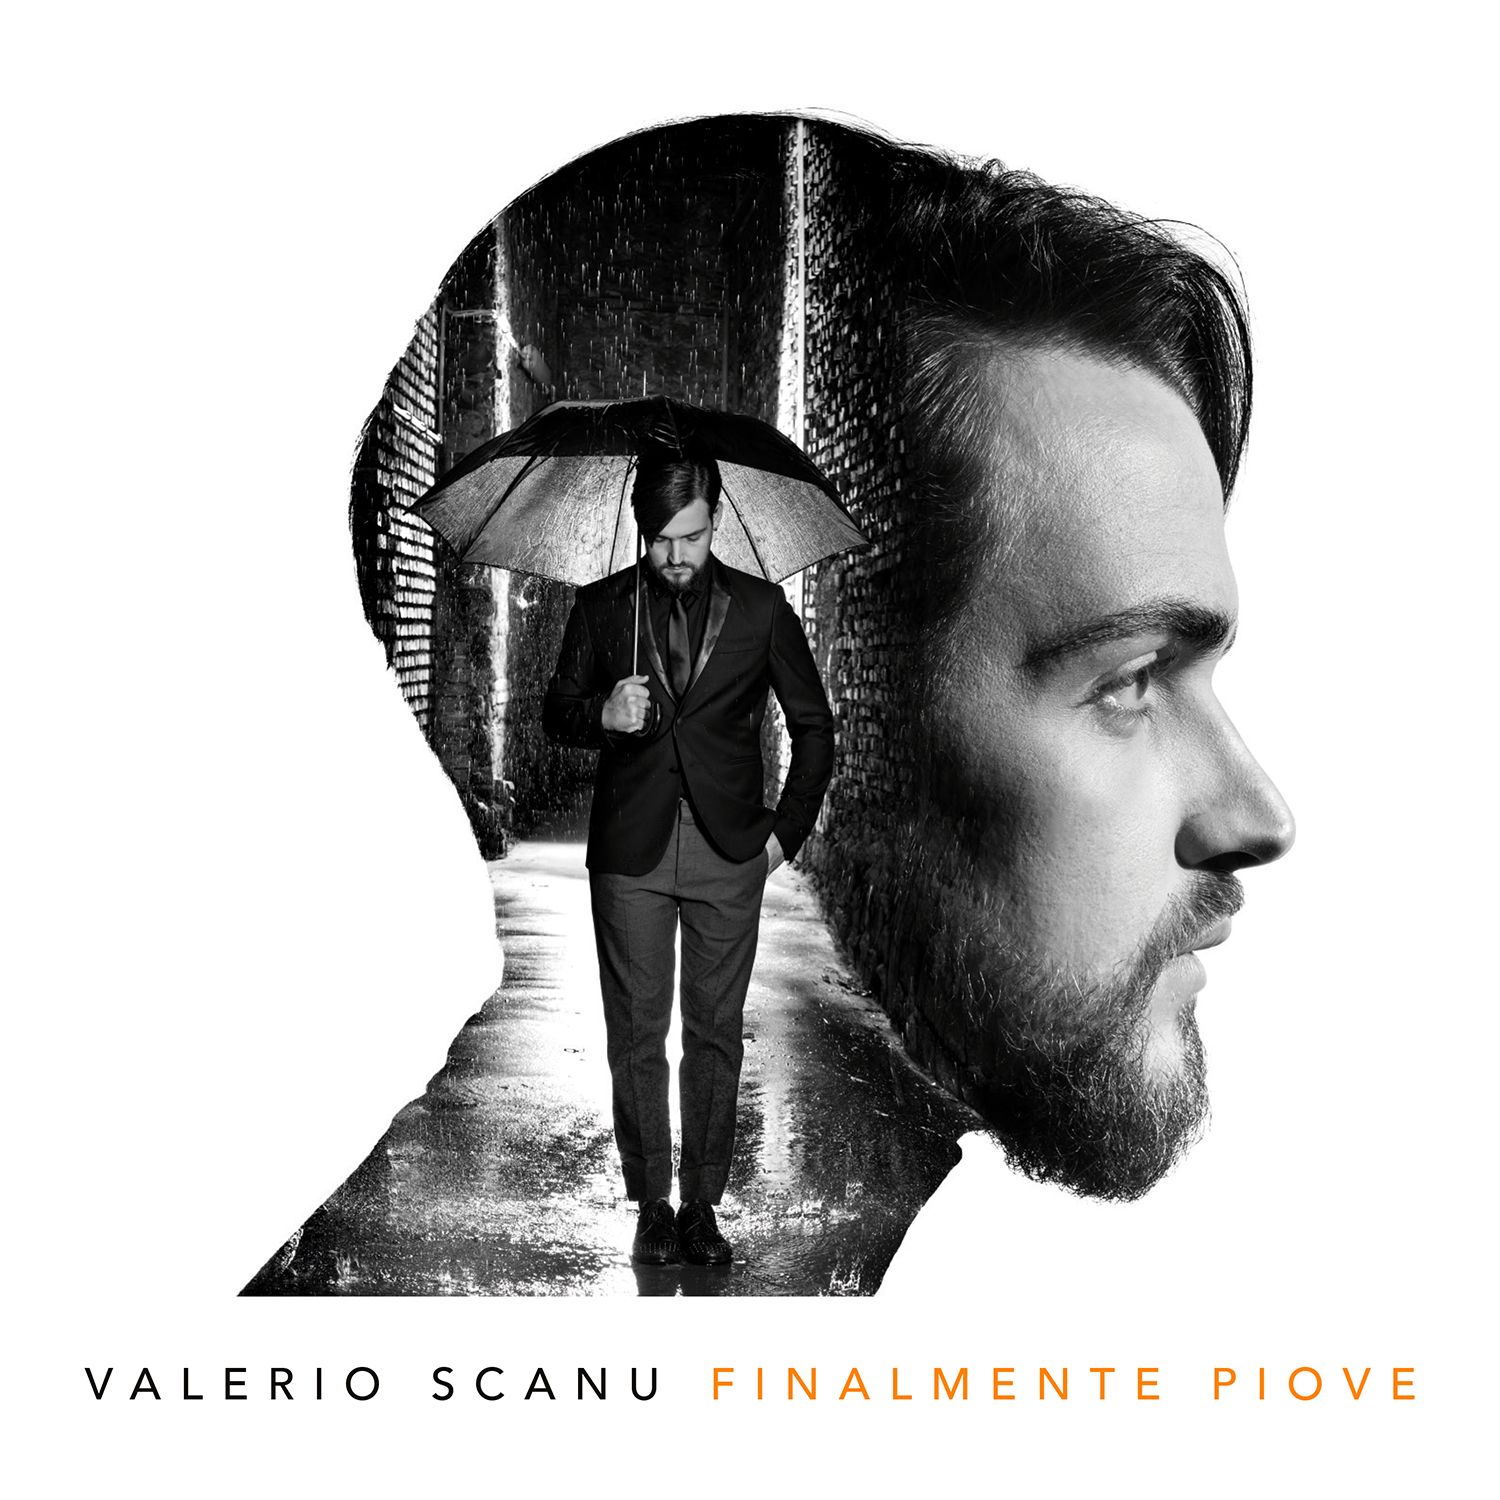 Valerio Scanu: "Partecipo per vincere!" - Valerio Scanu Finalmente piove - Gay.it